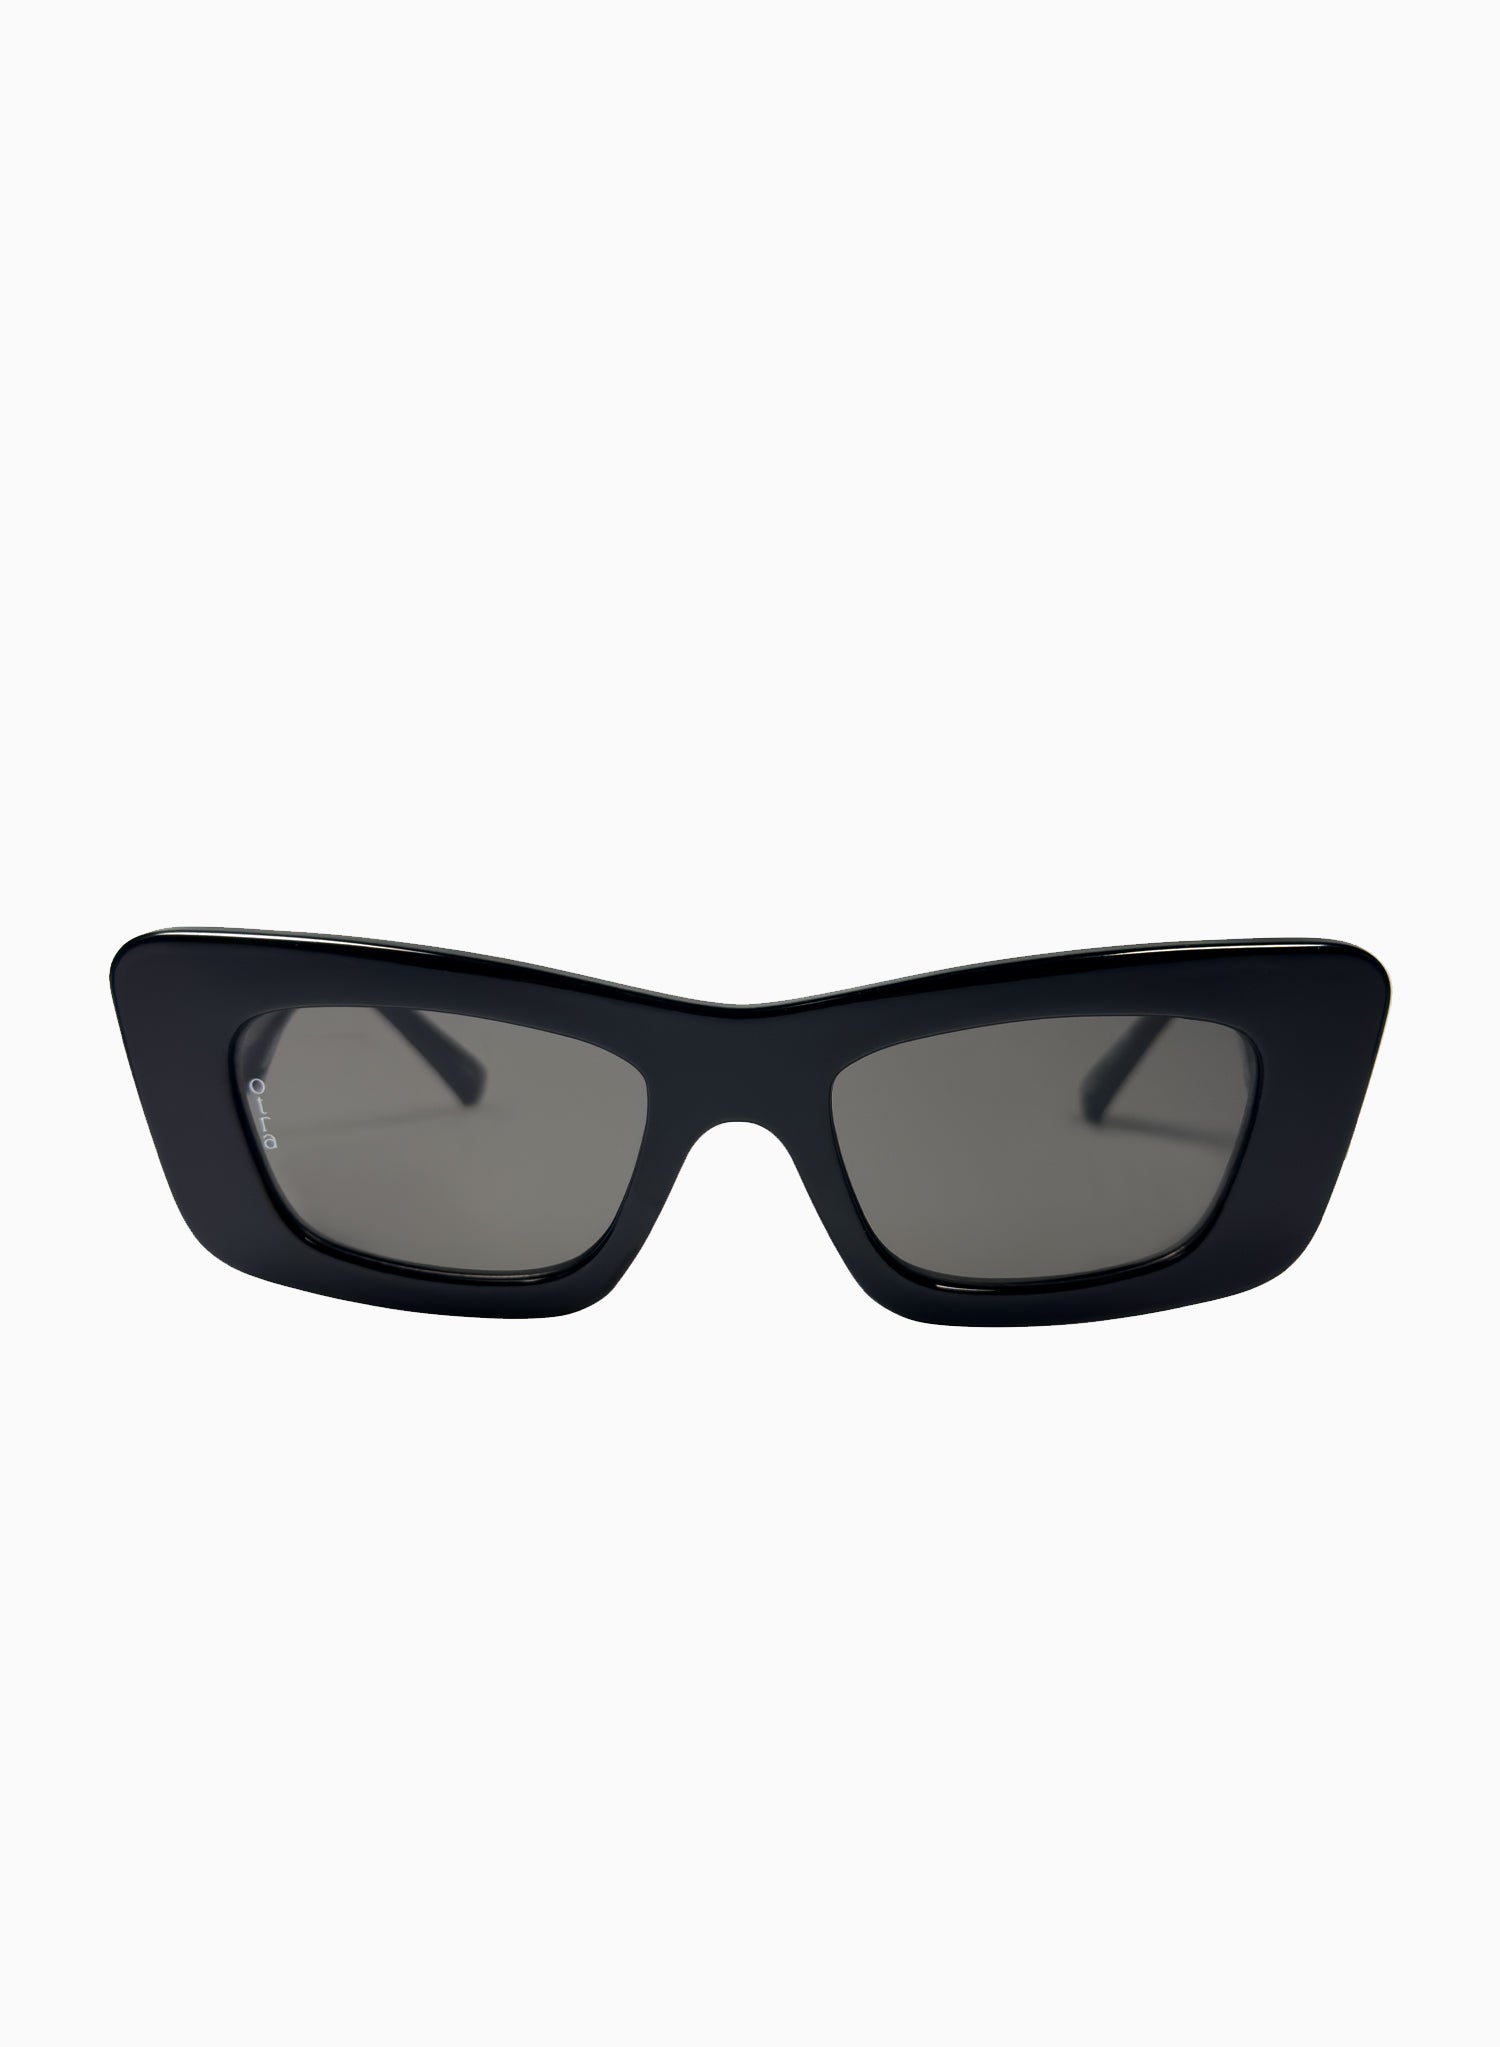 Zoe thick cat eye sunglasses in black